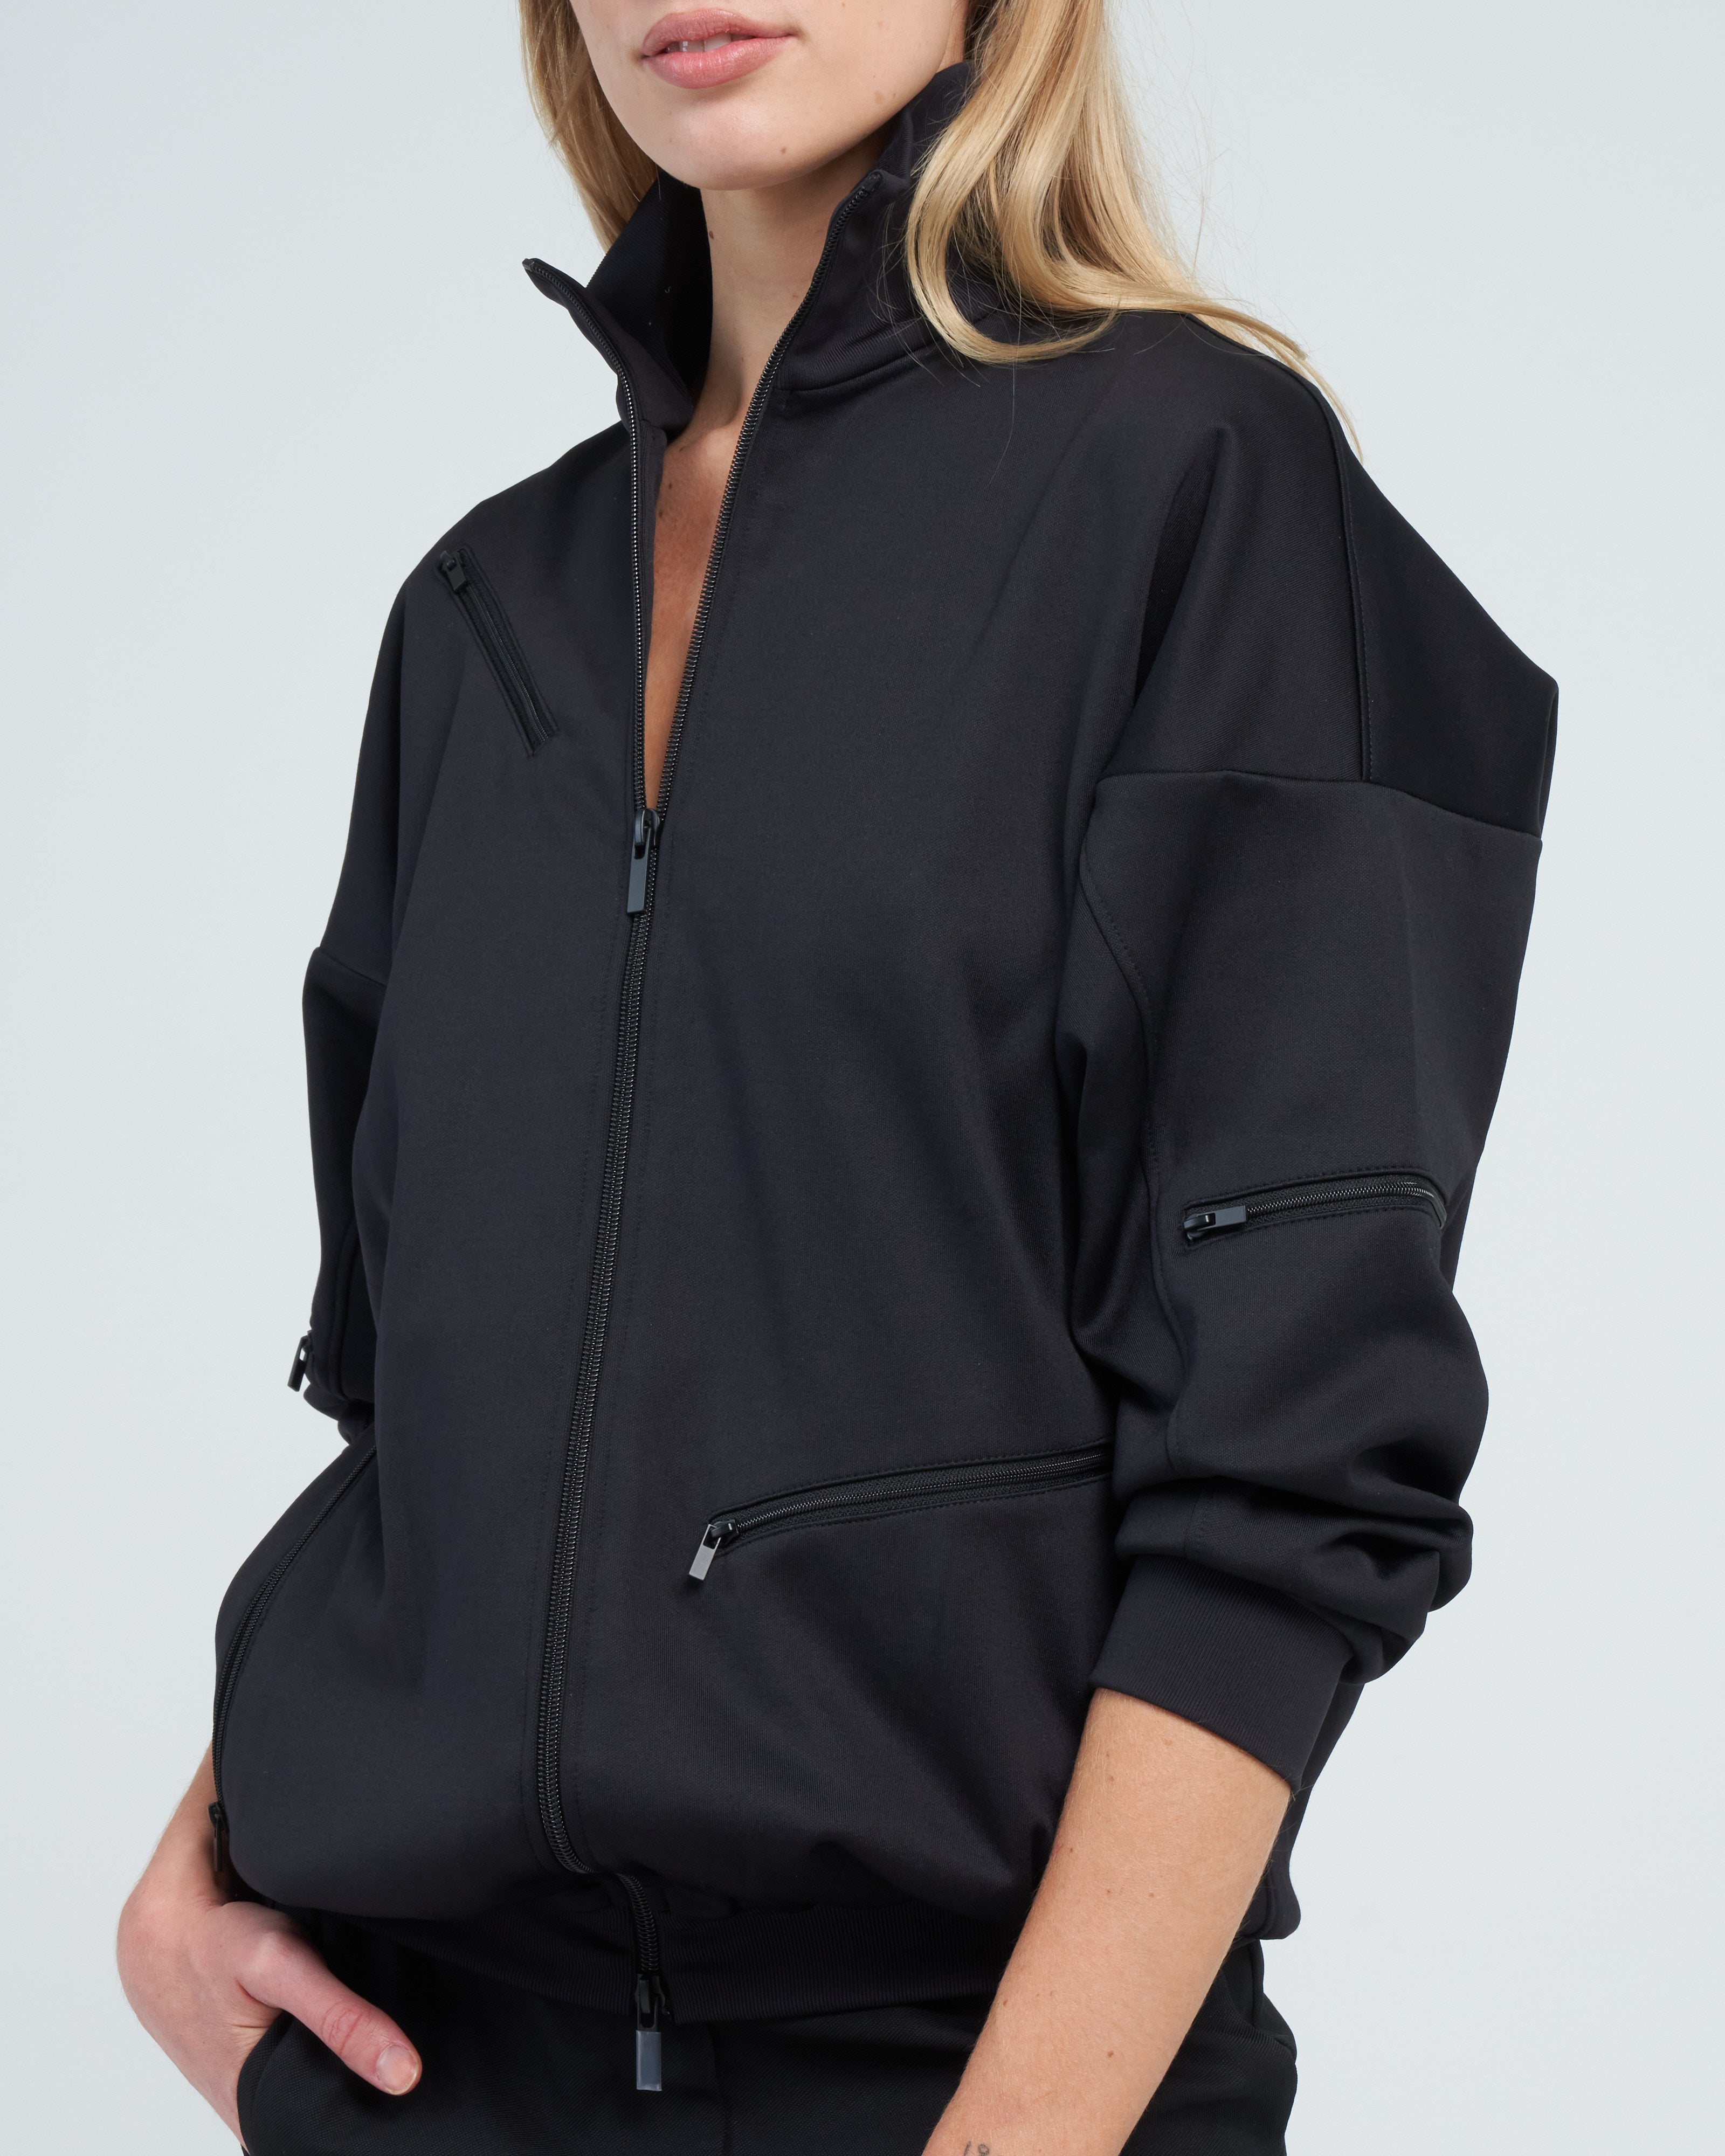 active knit zipper detailed track jacket - black